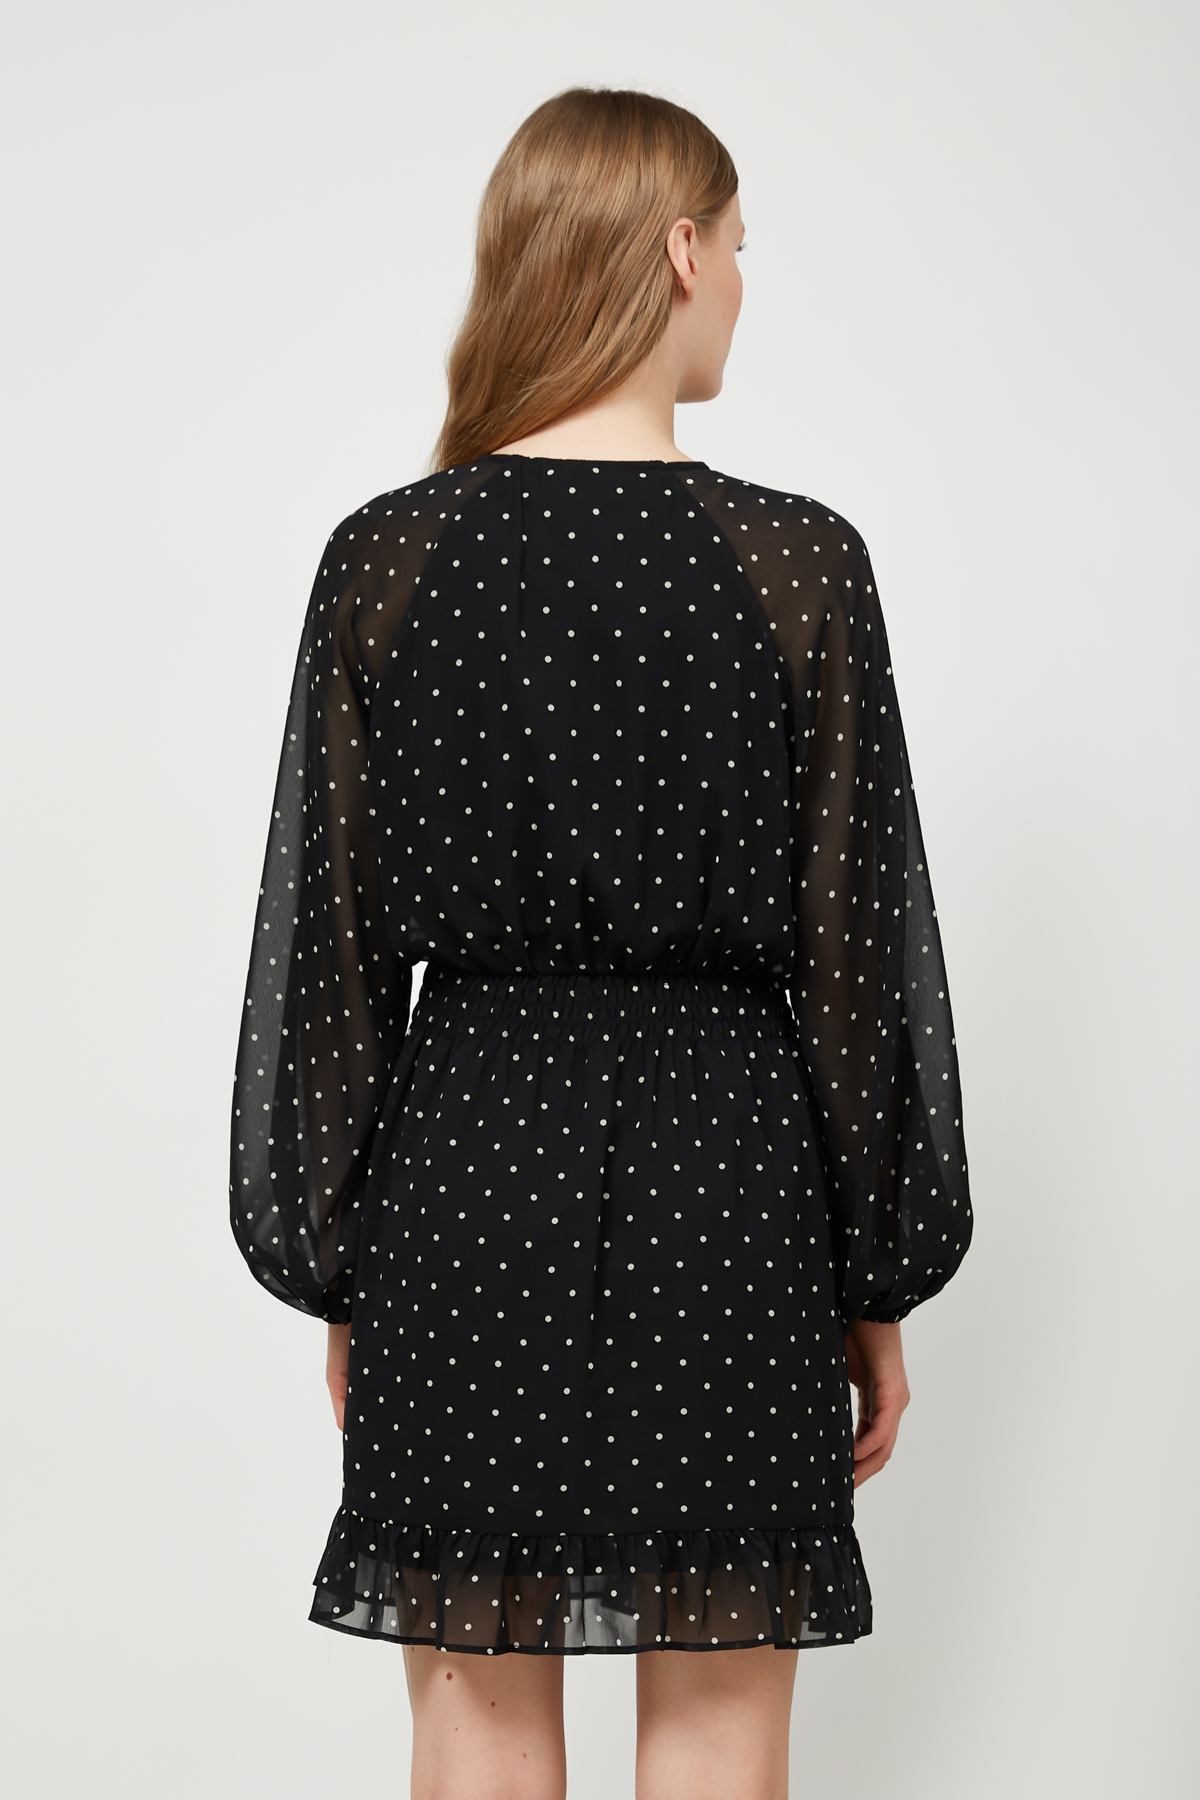 Short dress in chiffon with white polka dots print, photo 5